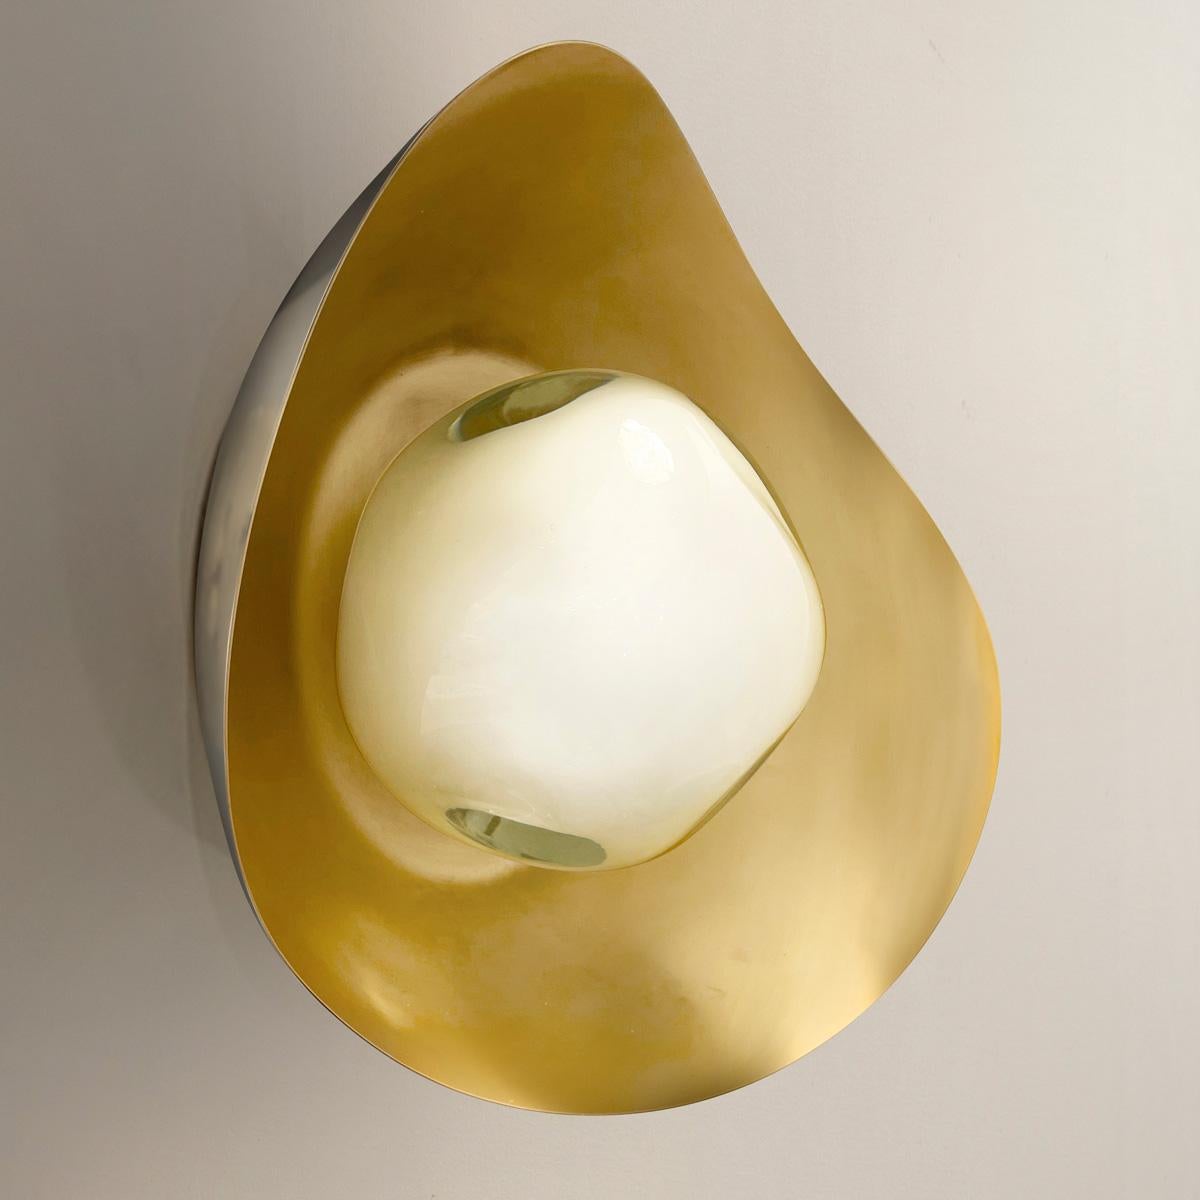 Organic Modern Perla Wall Light by Gaspare Asaro-Satin Brass/Polished Nickel Finish For Sale